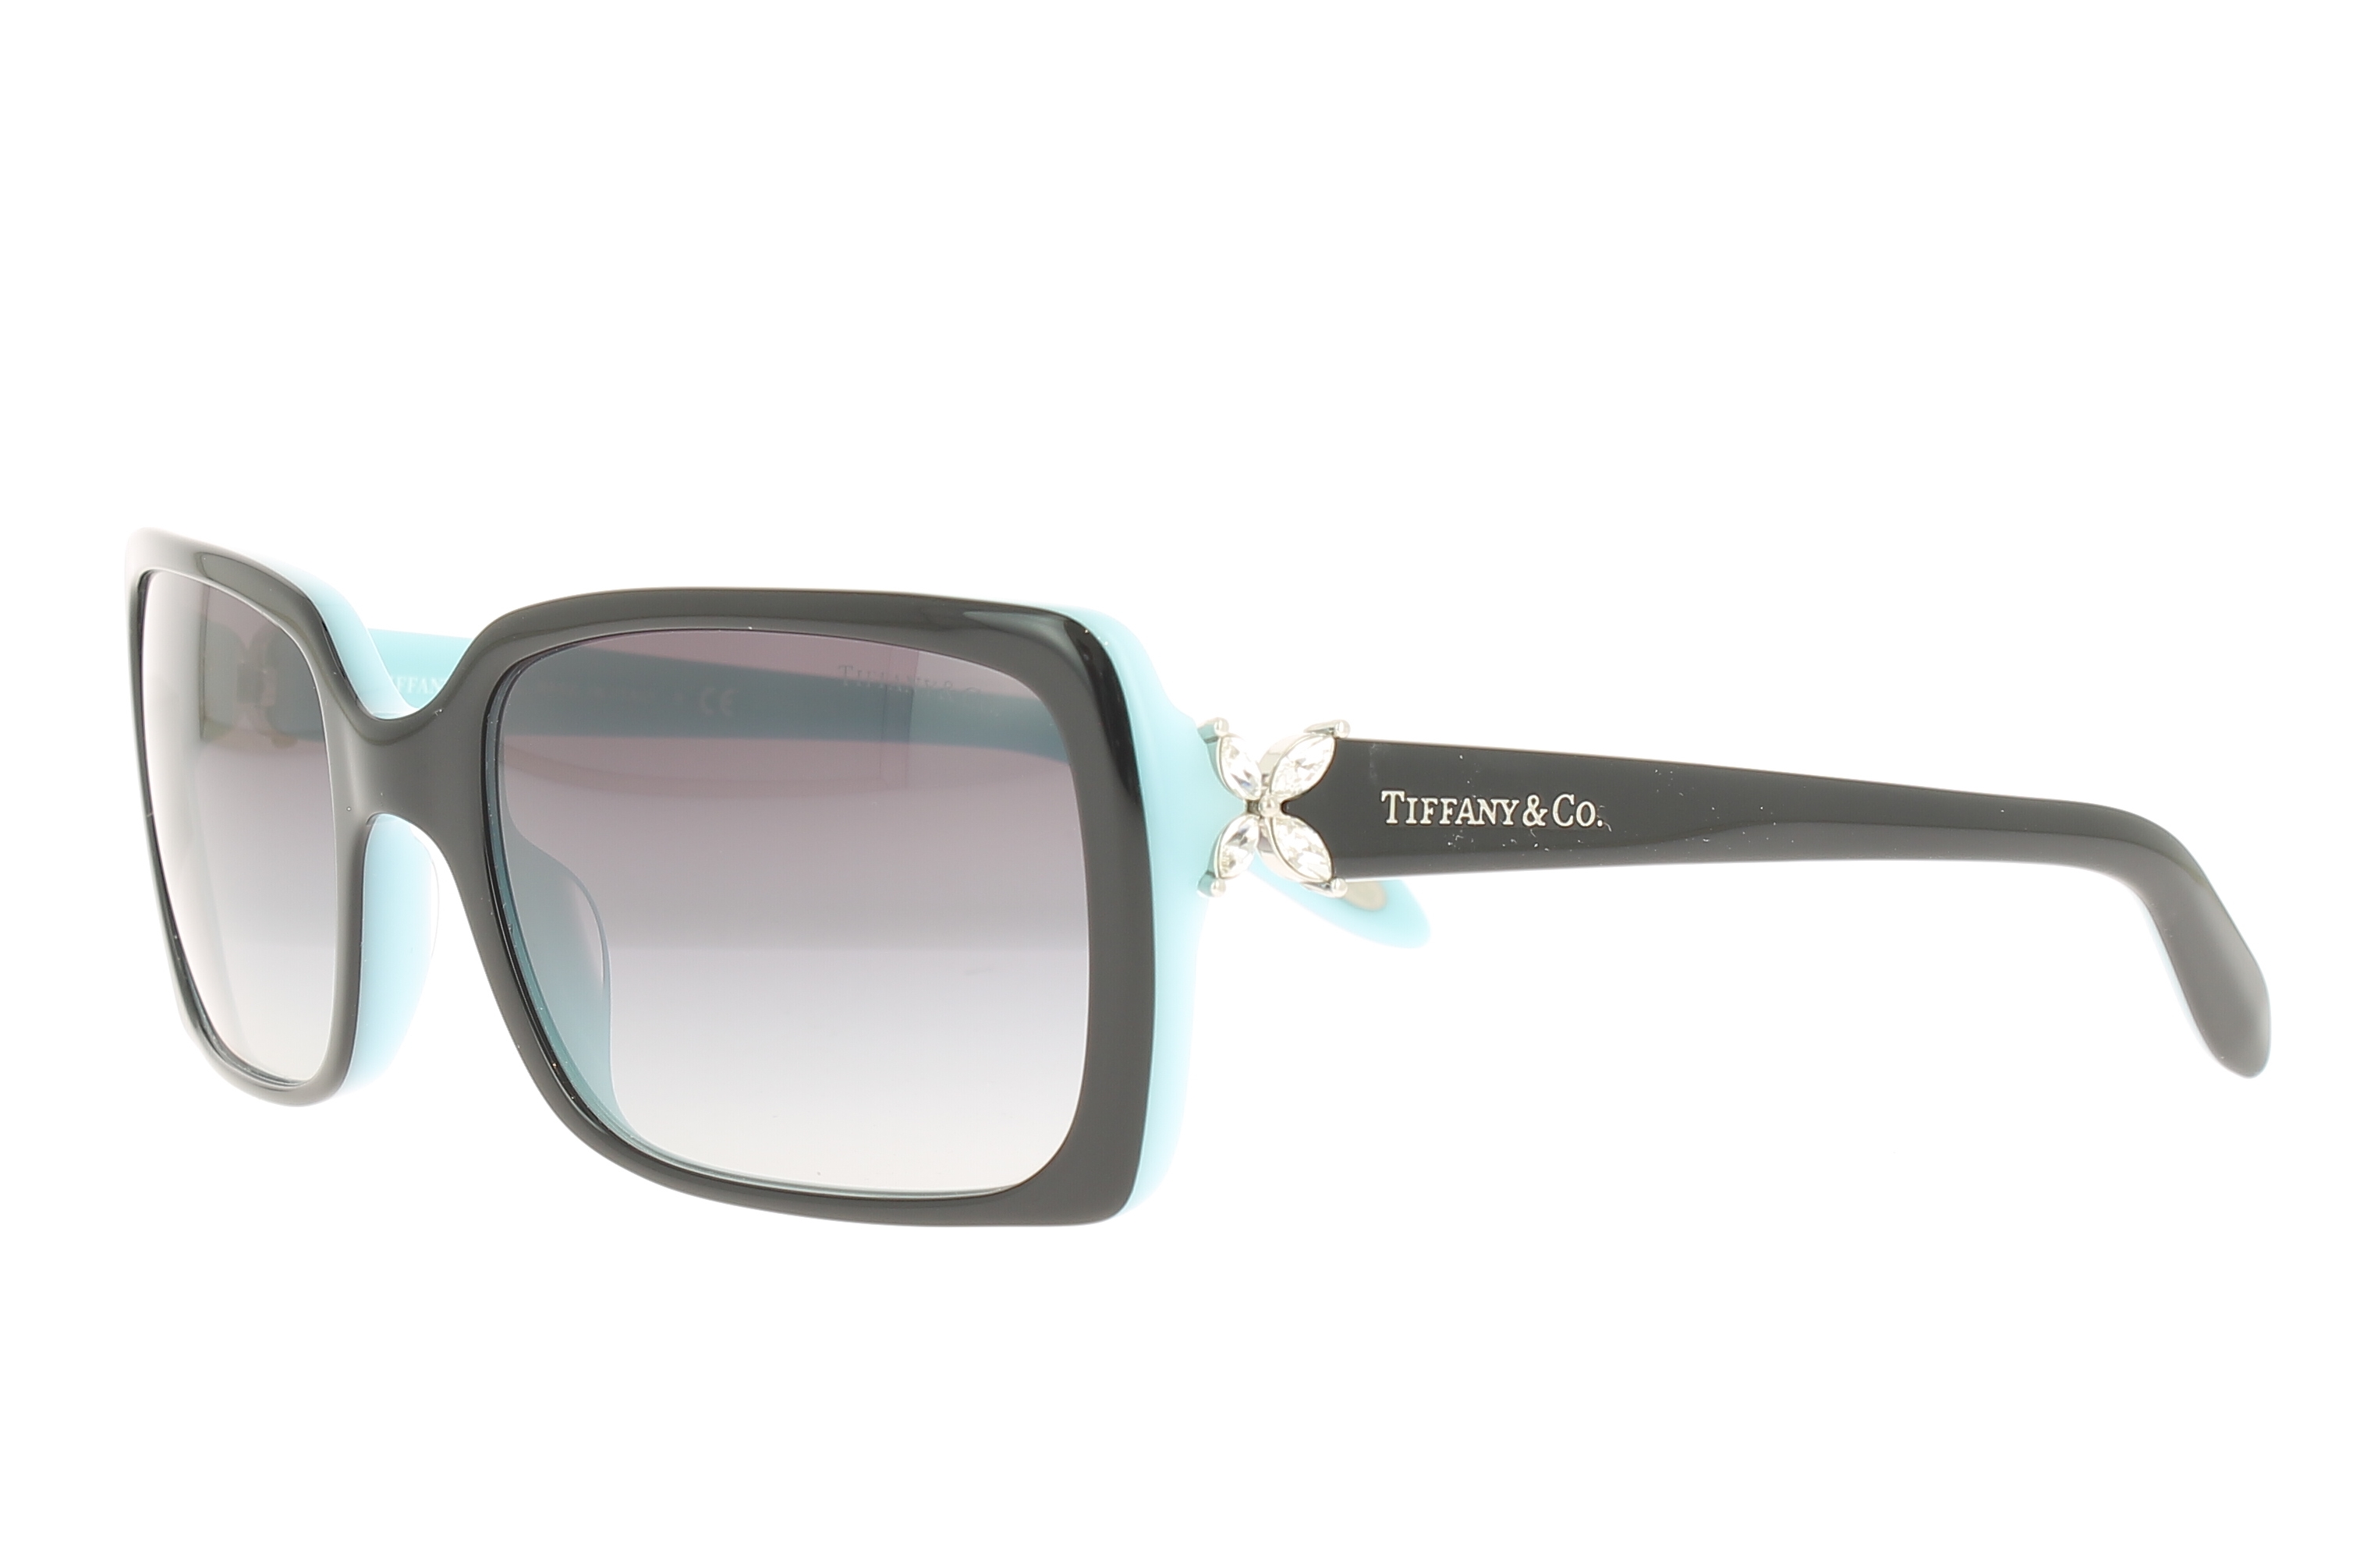 Sunglasses Tiffany-co Tf4047b /s, black colour - Doyle